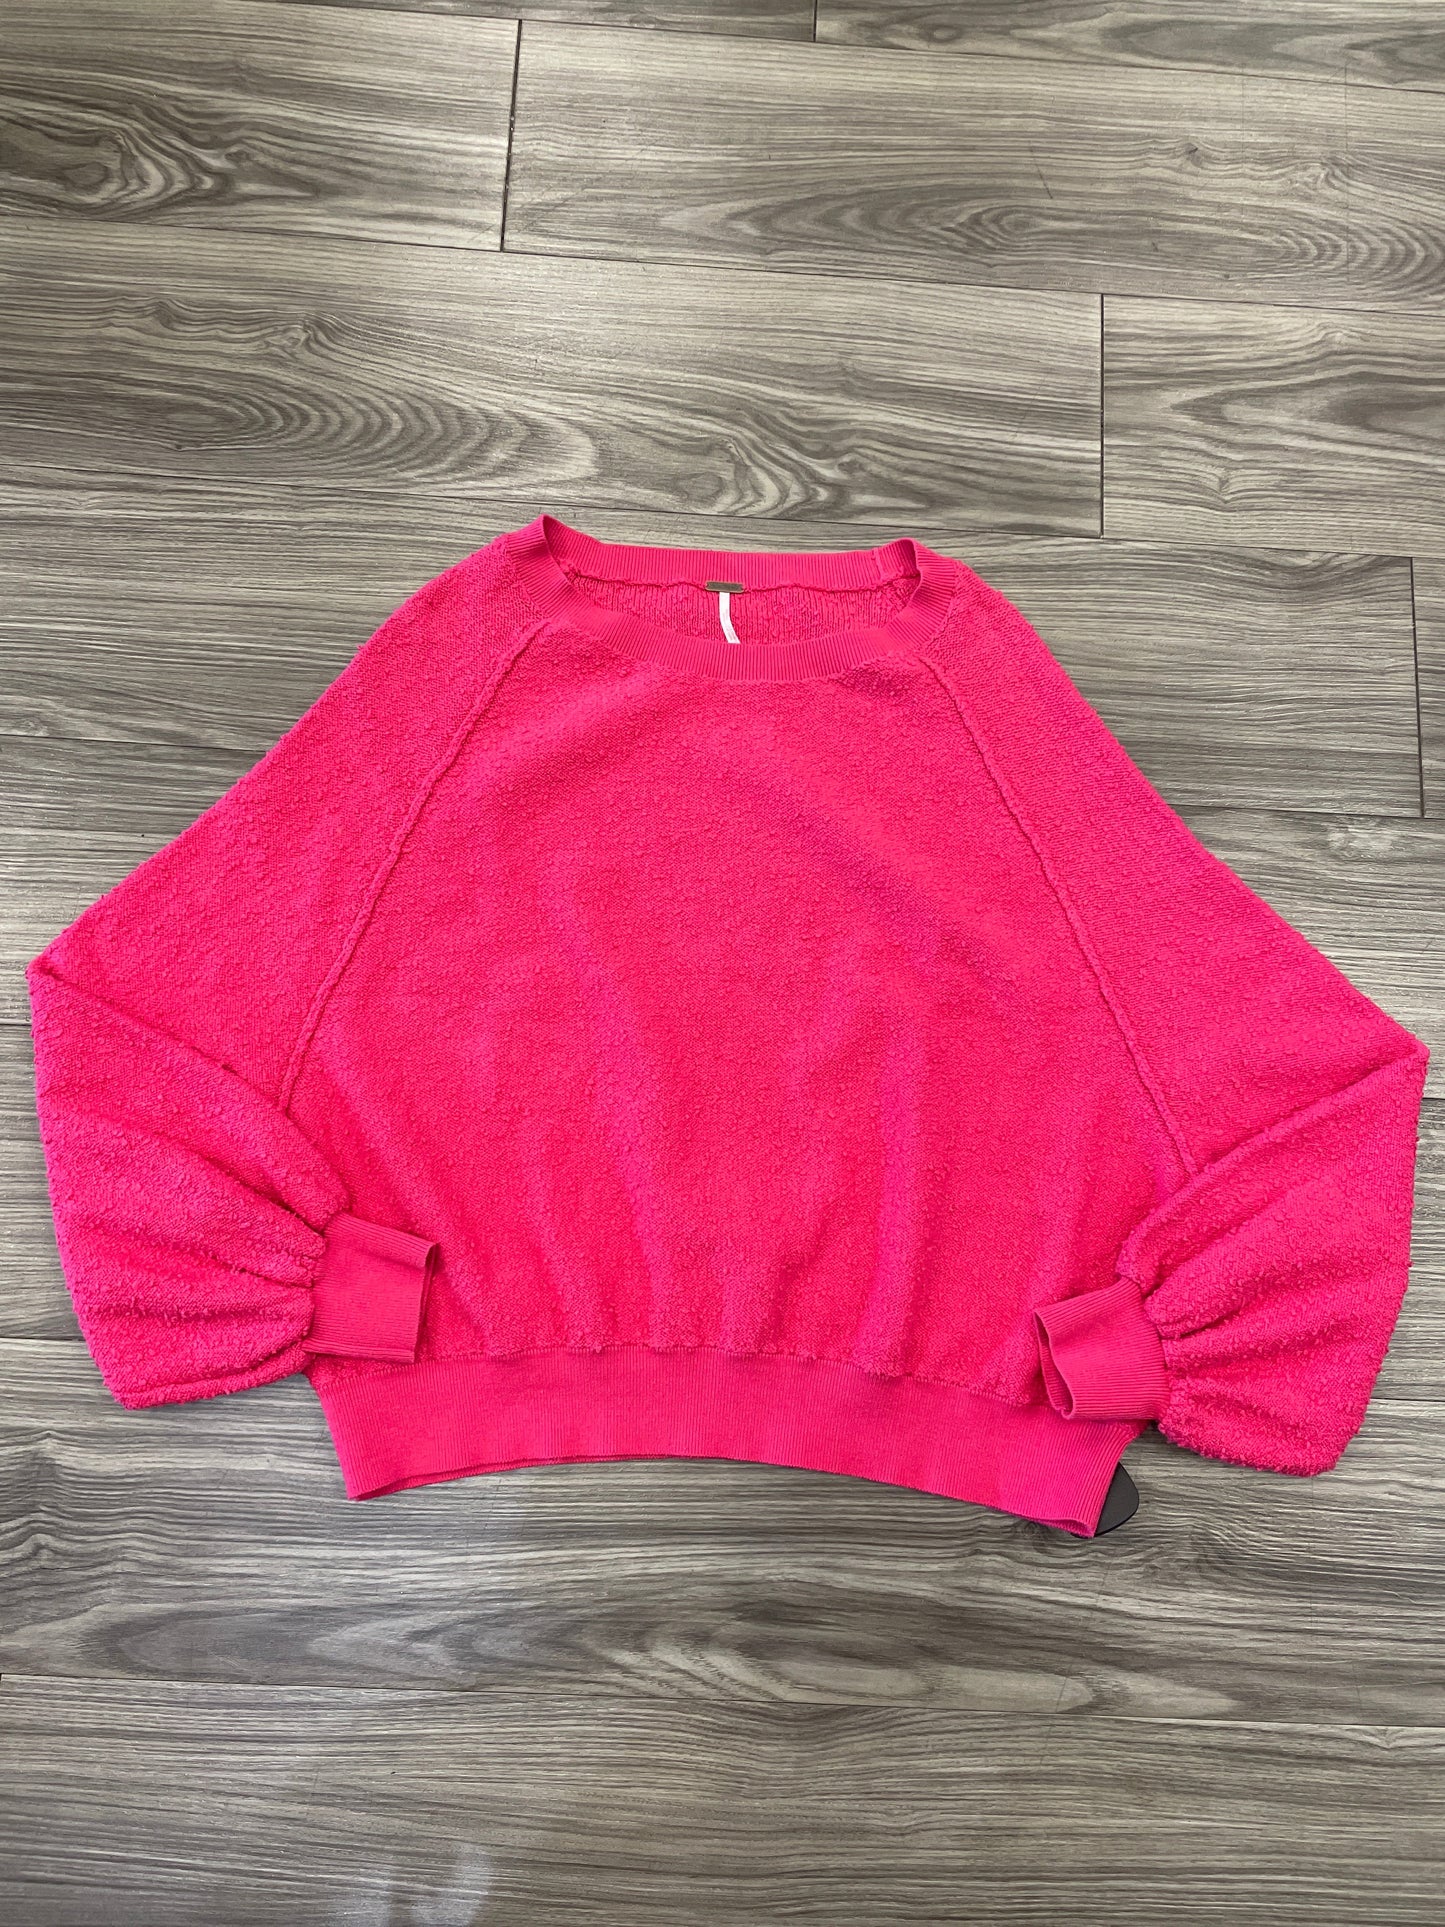 Pink Sweatshirt Crewneck Free People, Size S